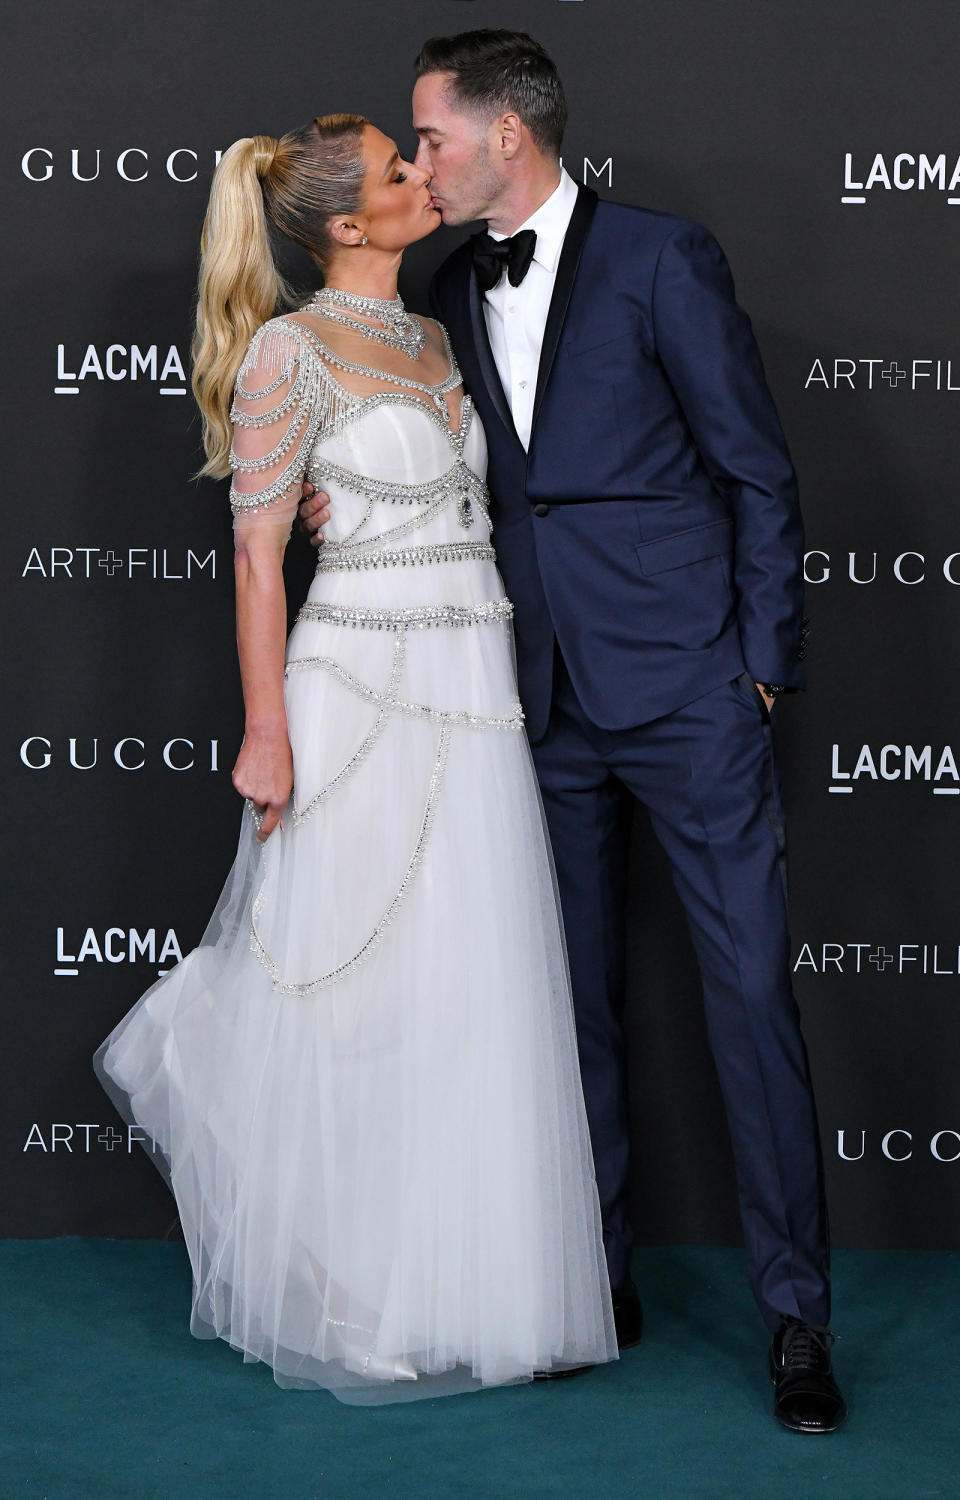 10th Annual LACMA ART+FILM GALA Presented By Gucci (FilmMagic / Getty Images)